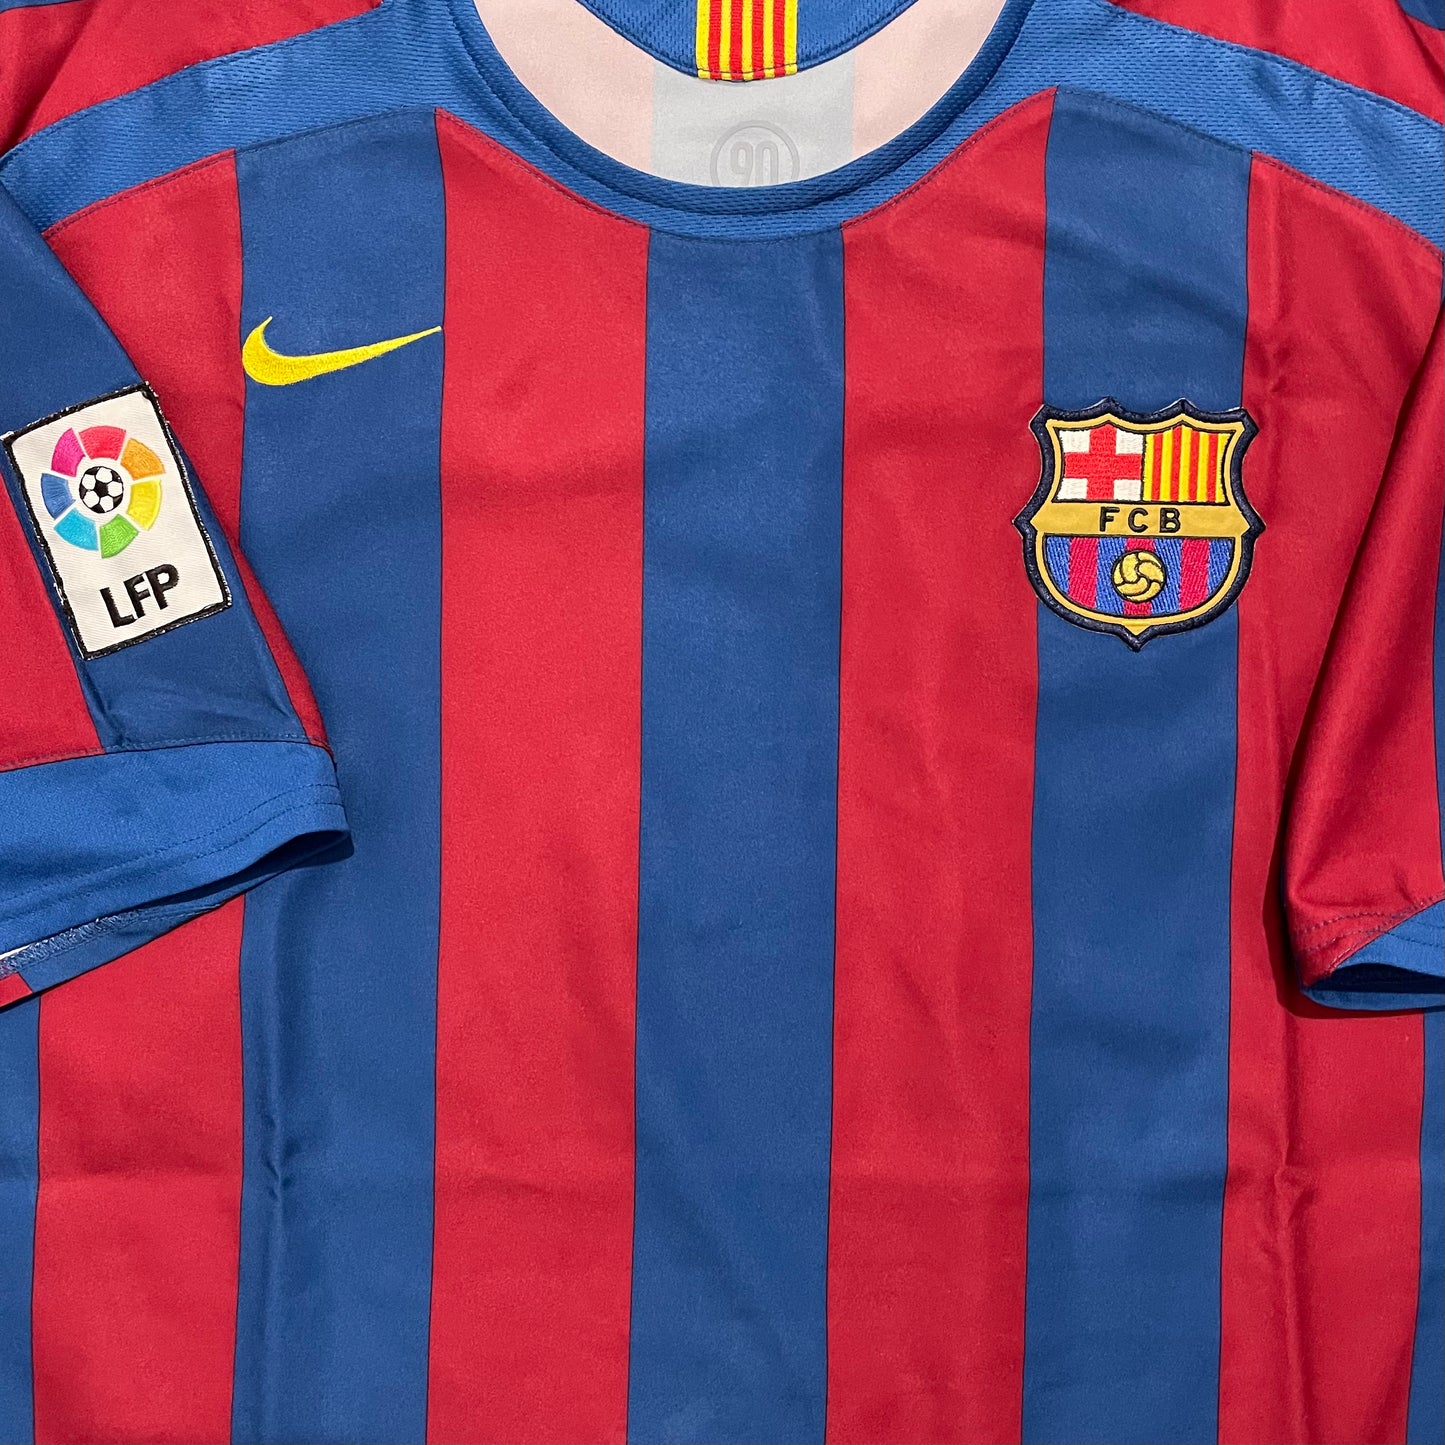 <tc>2005-2006 FC Barcelona camiseta local #10 Ronaldinho (XL)</tc>